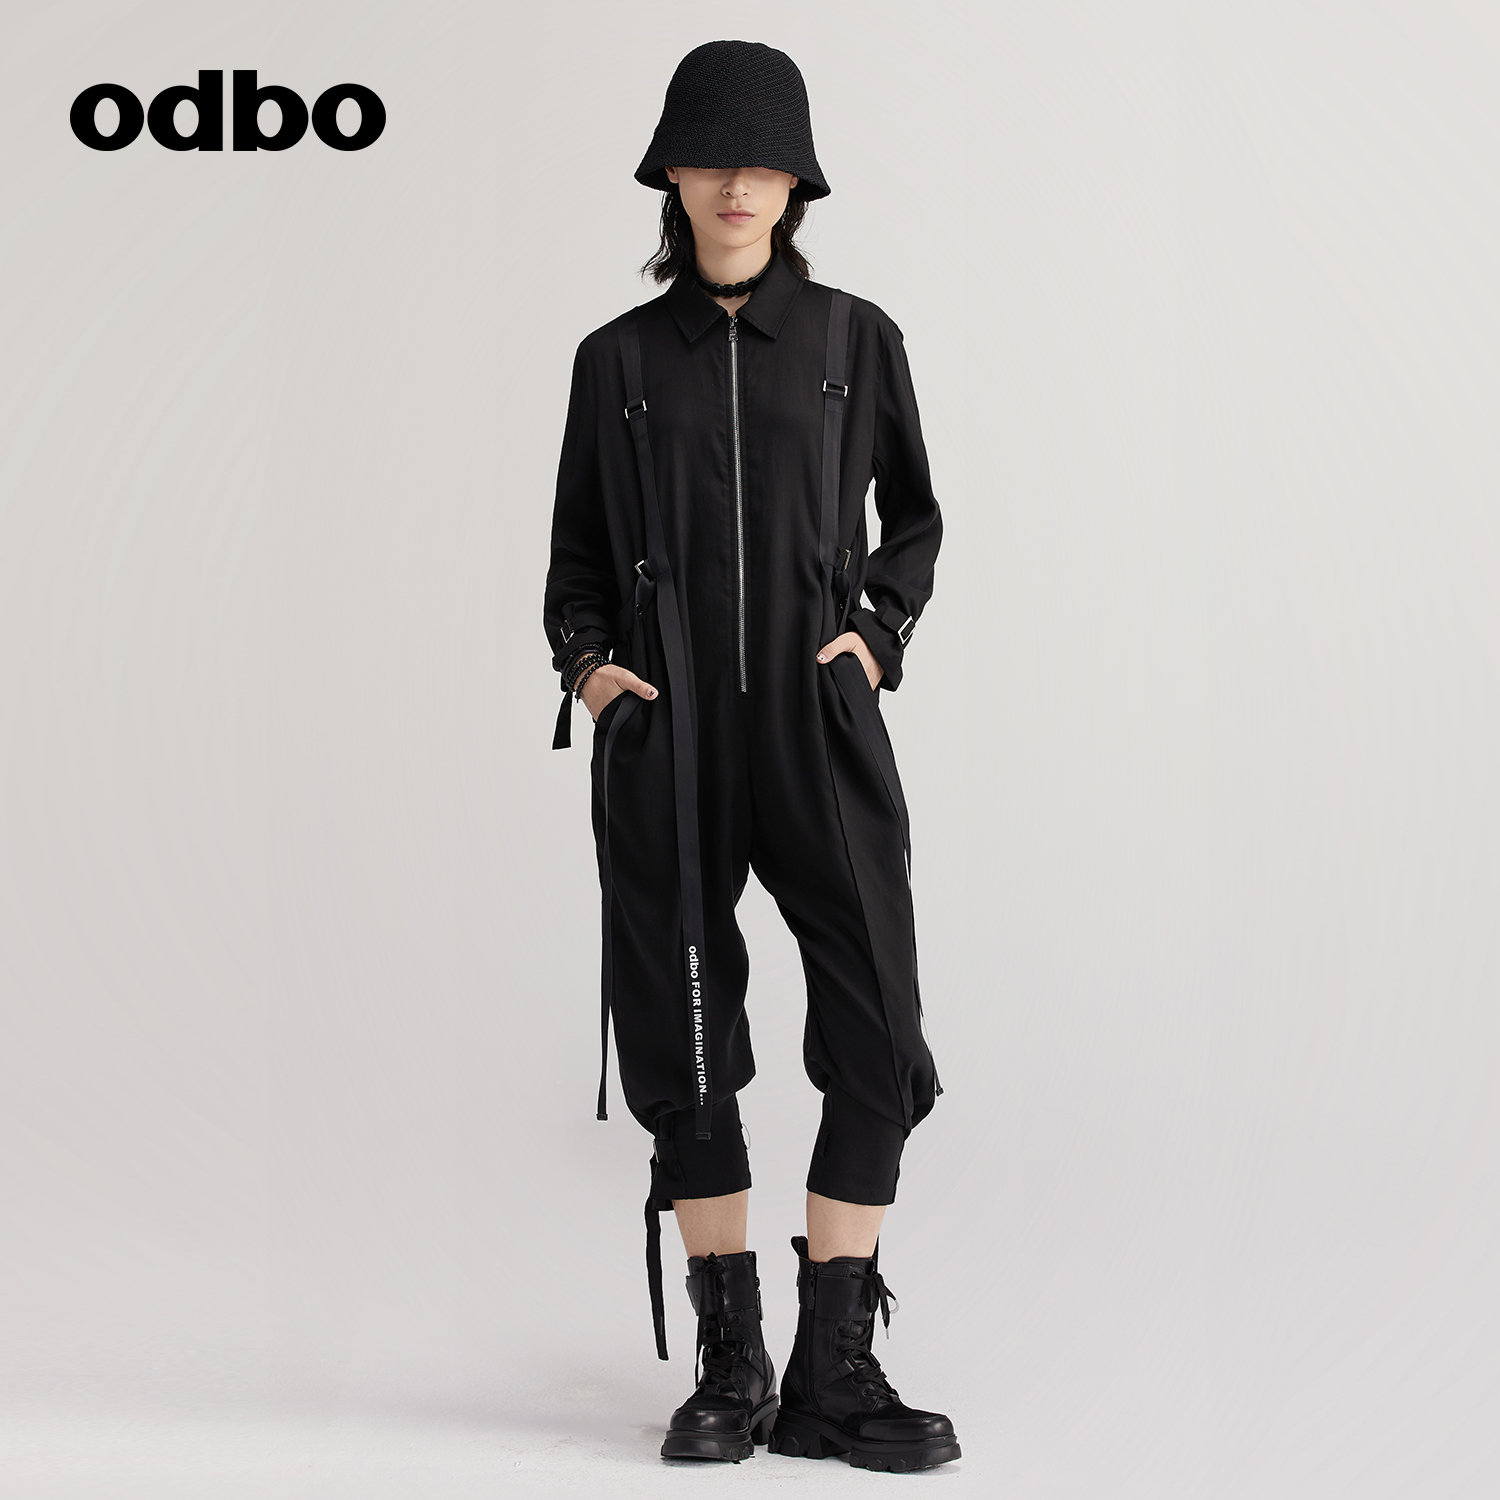 odbo/欧迪比欧原创设计工装风时尚连体裤女夏装新款七分裤子